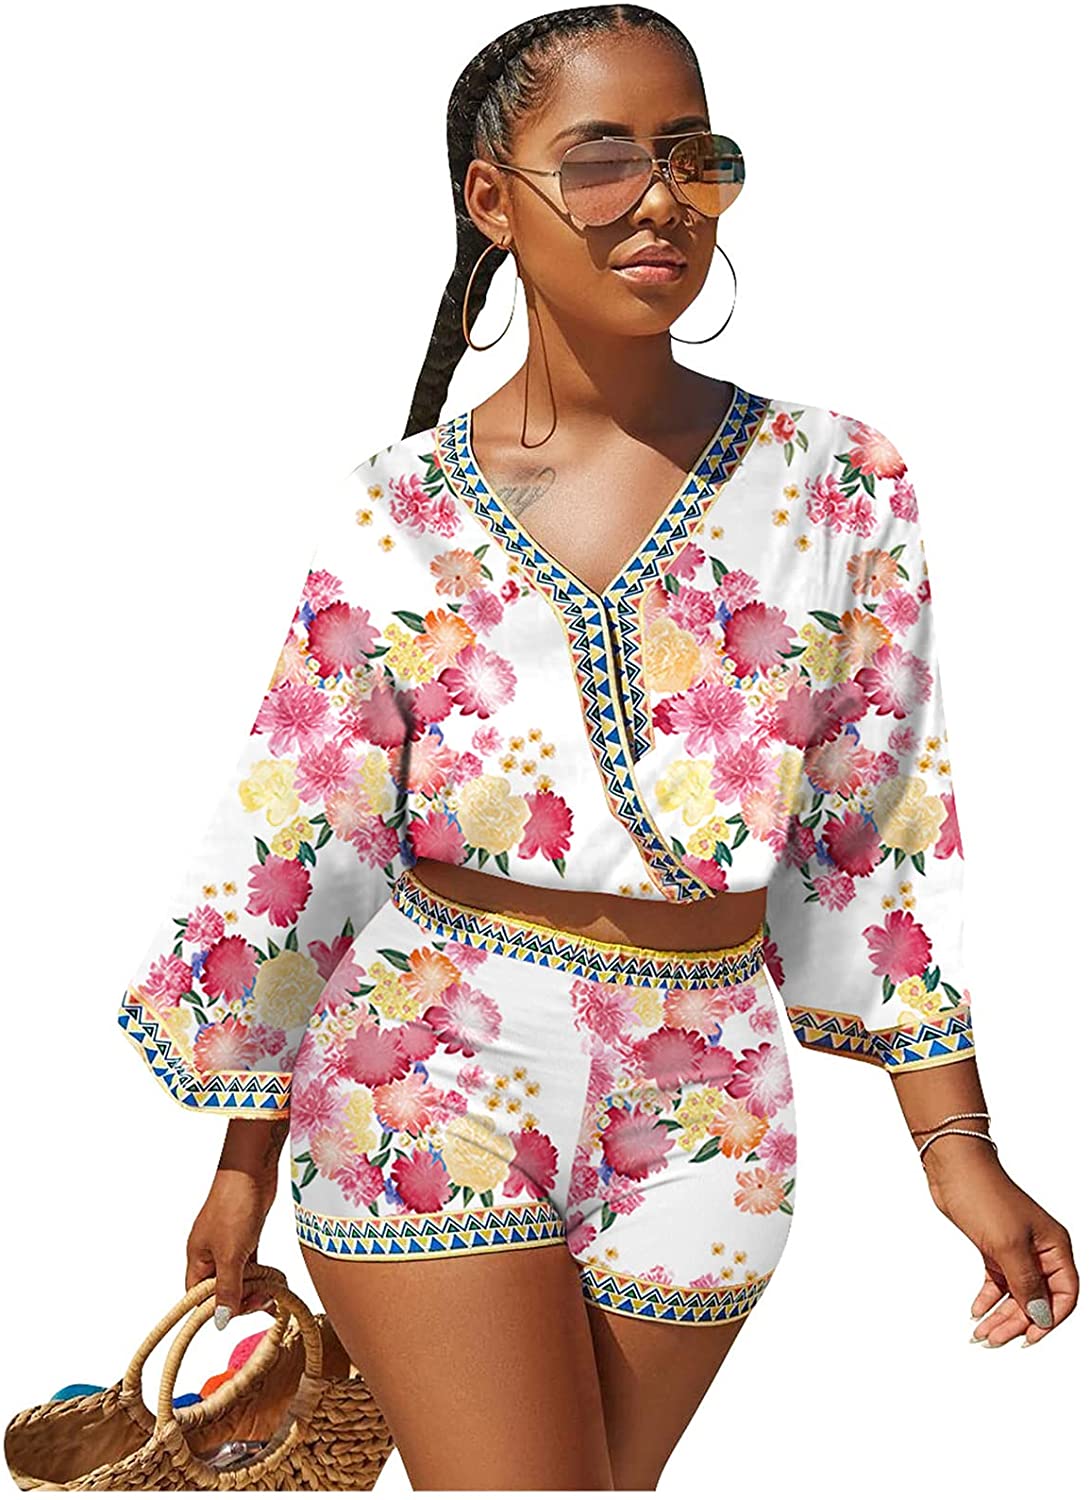 KaLI_store Matching Short Sets for Women 2 Piece Outfits for Women Summer  Two Piece Crop Top Shorts Set Boho Floral Print Romper Jumpsuit Beige,M 